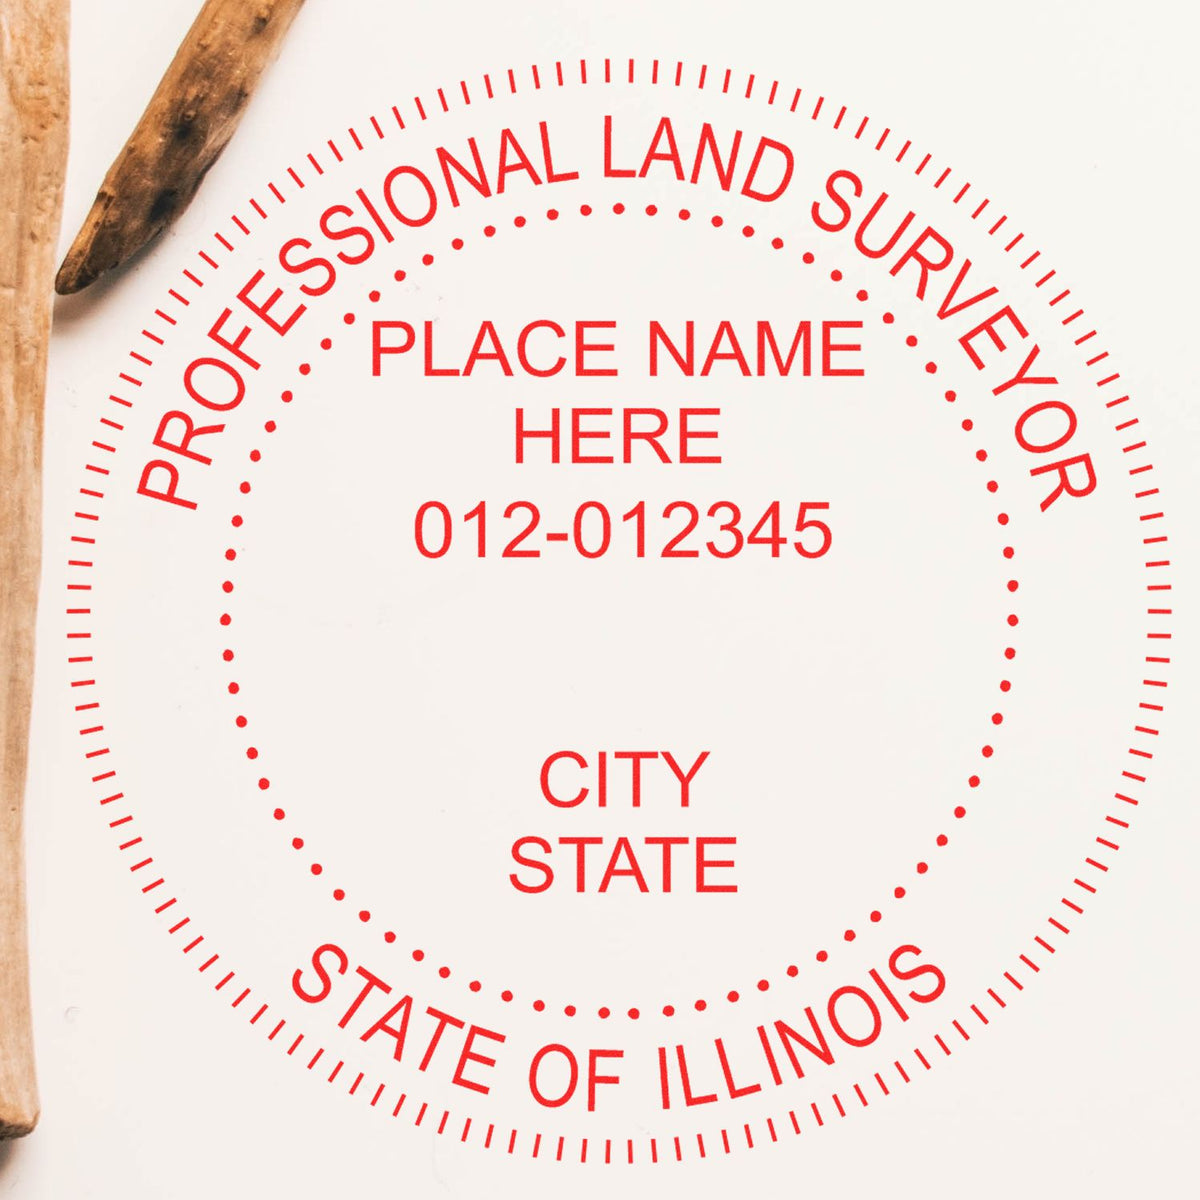 Illinois Land Surveyor Seal Stamp In Use Photo